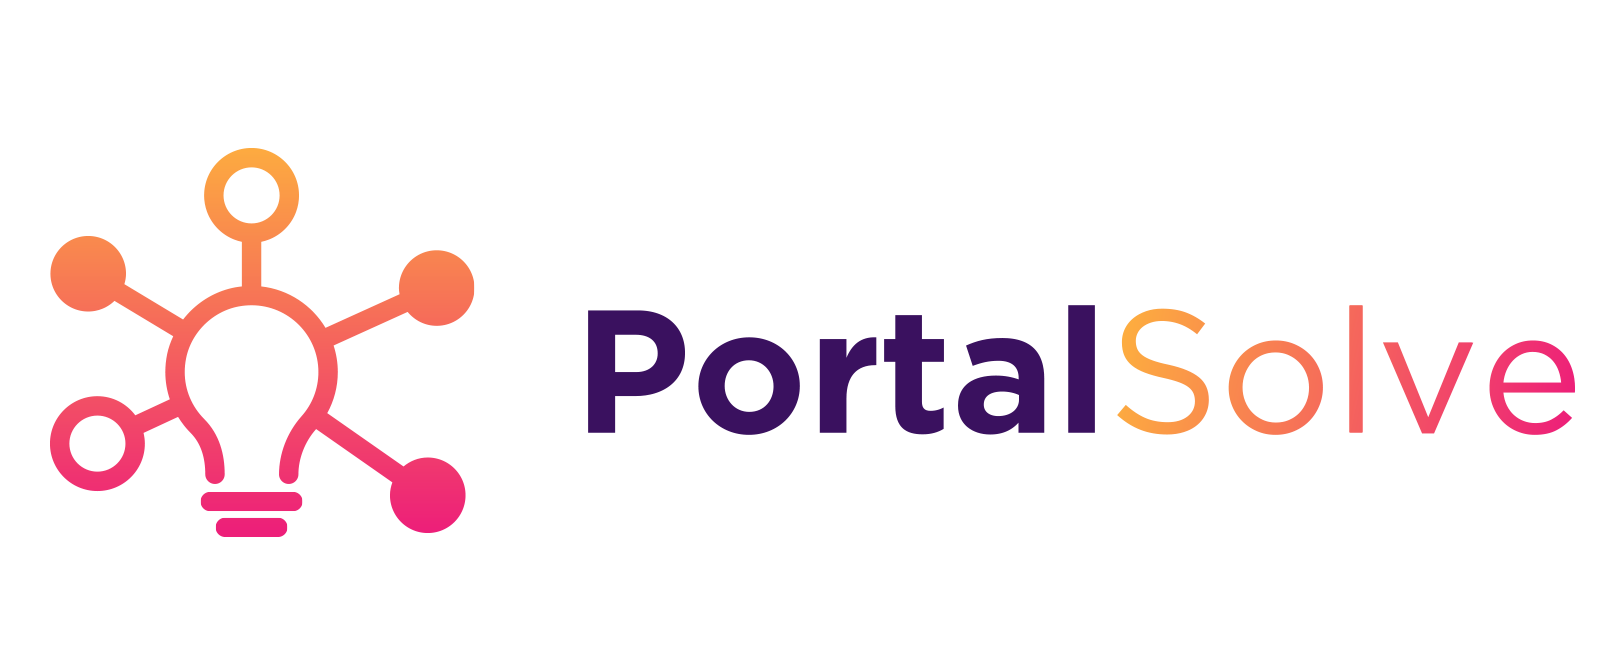 78964_Portal Solve _Flat_H_01 - Purple Portal transparent background - large